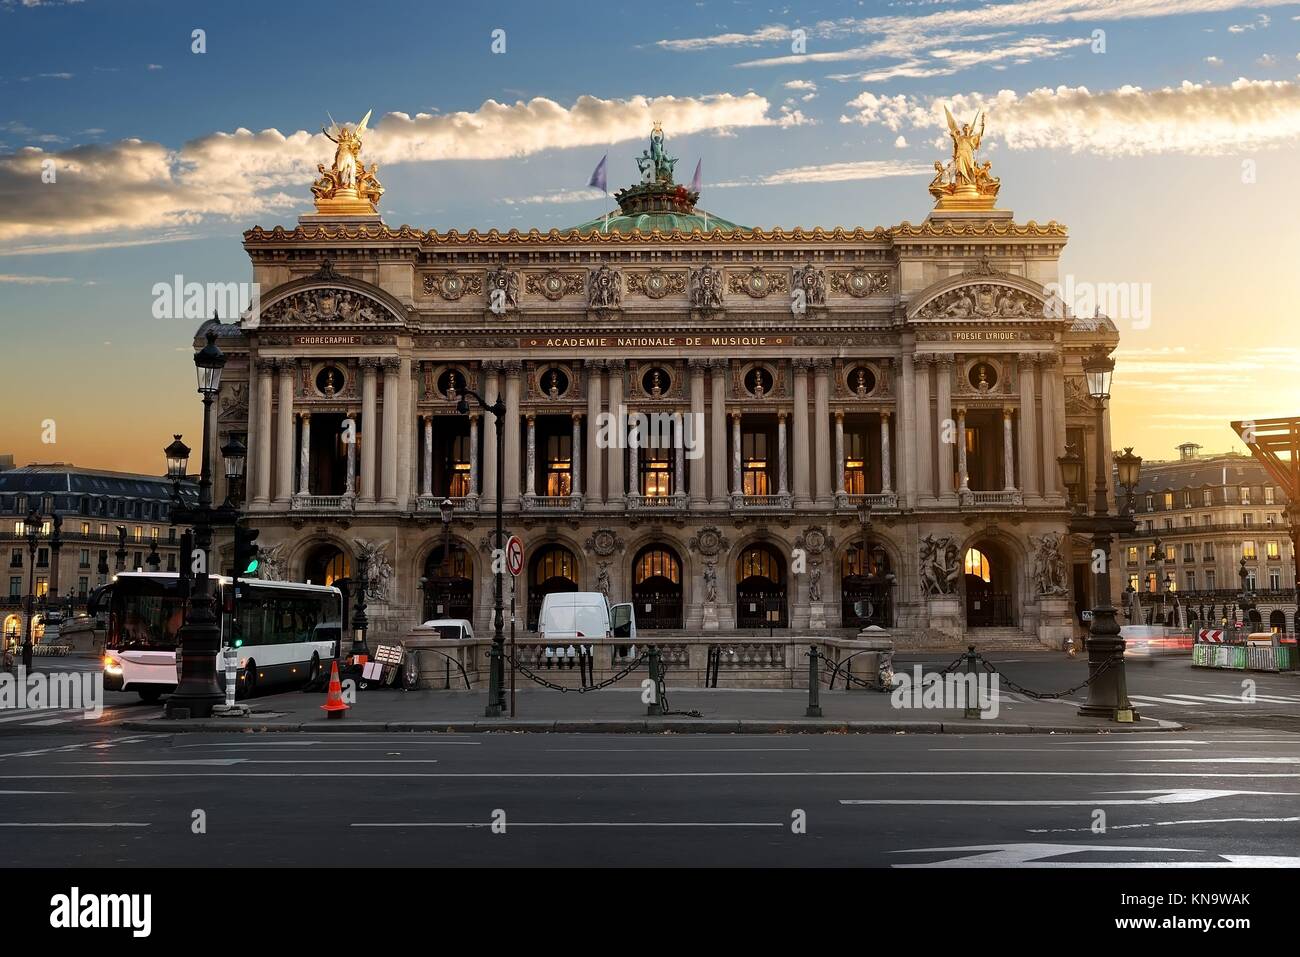 Parisian Grand Opera in the morning, France. Stock Photo